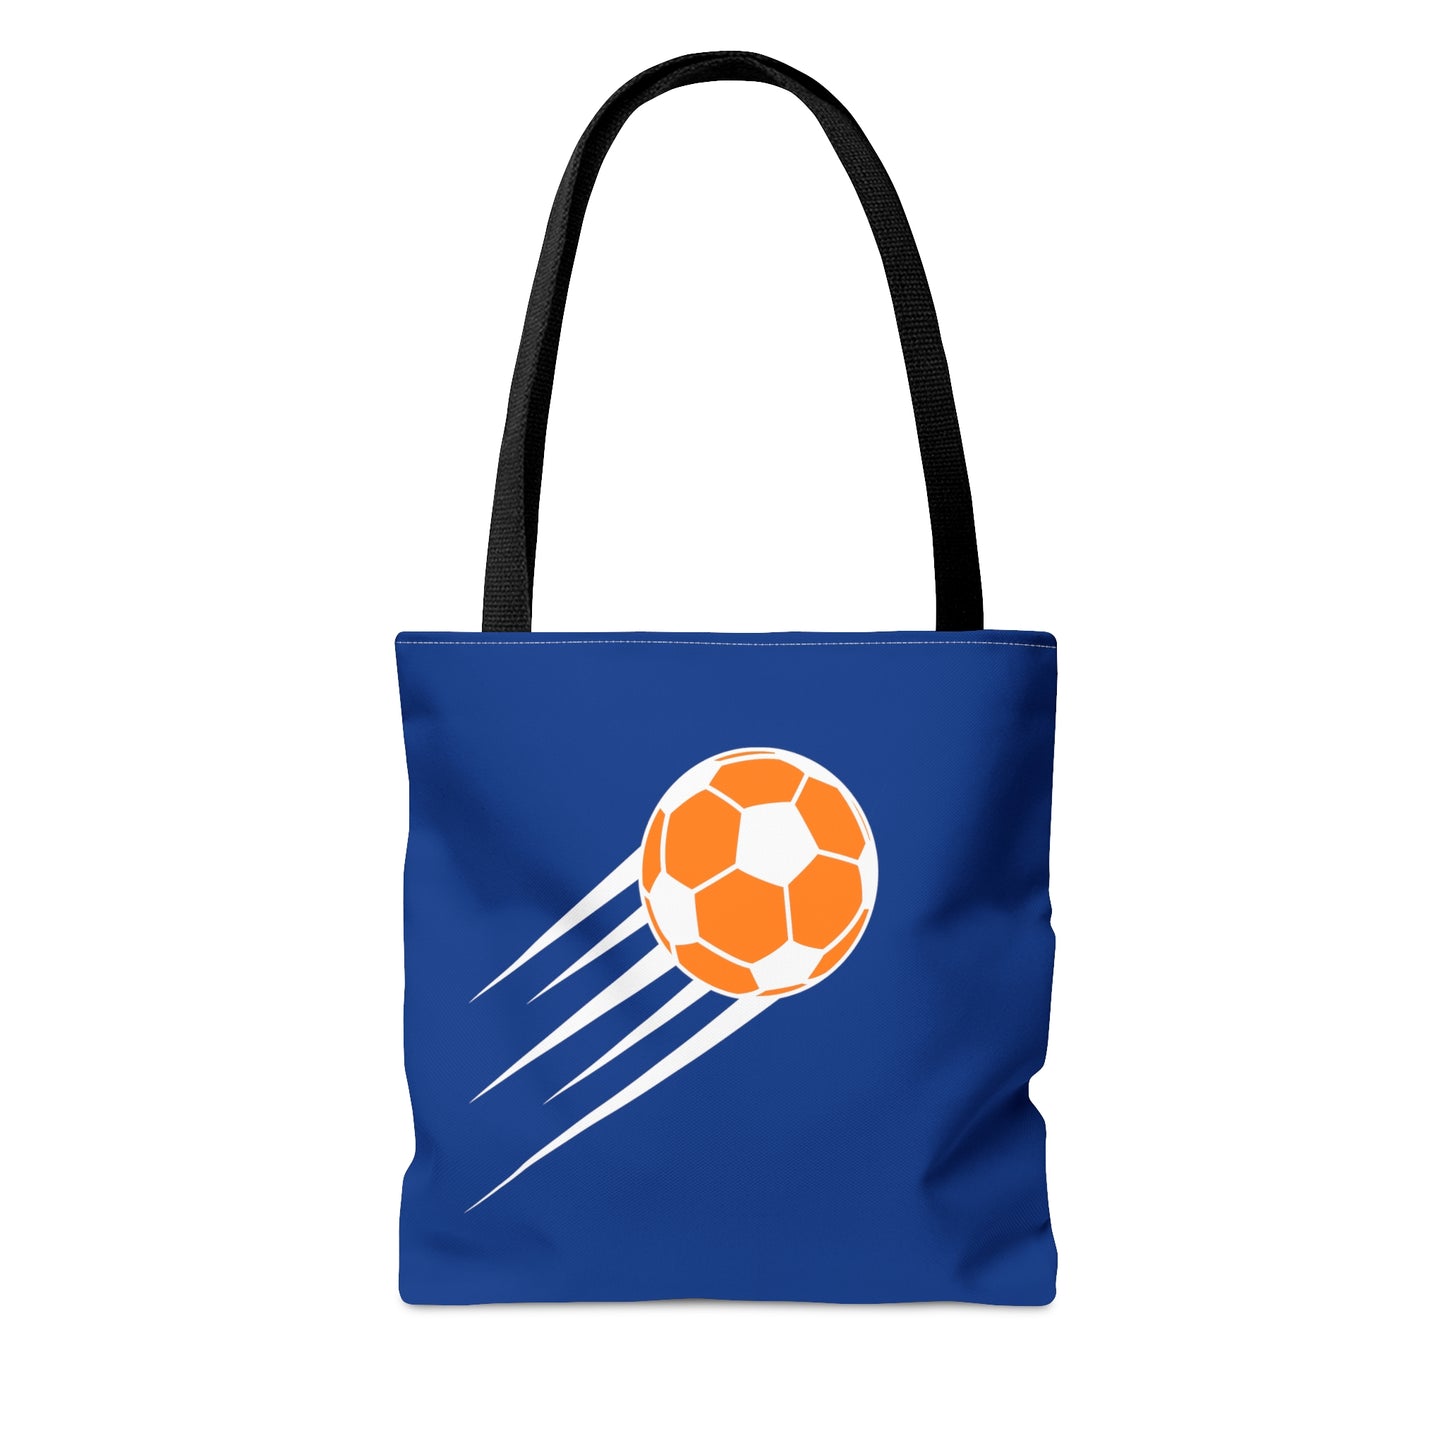 SOCCER Tote Bag, Blue and Orange